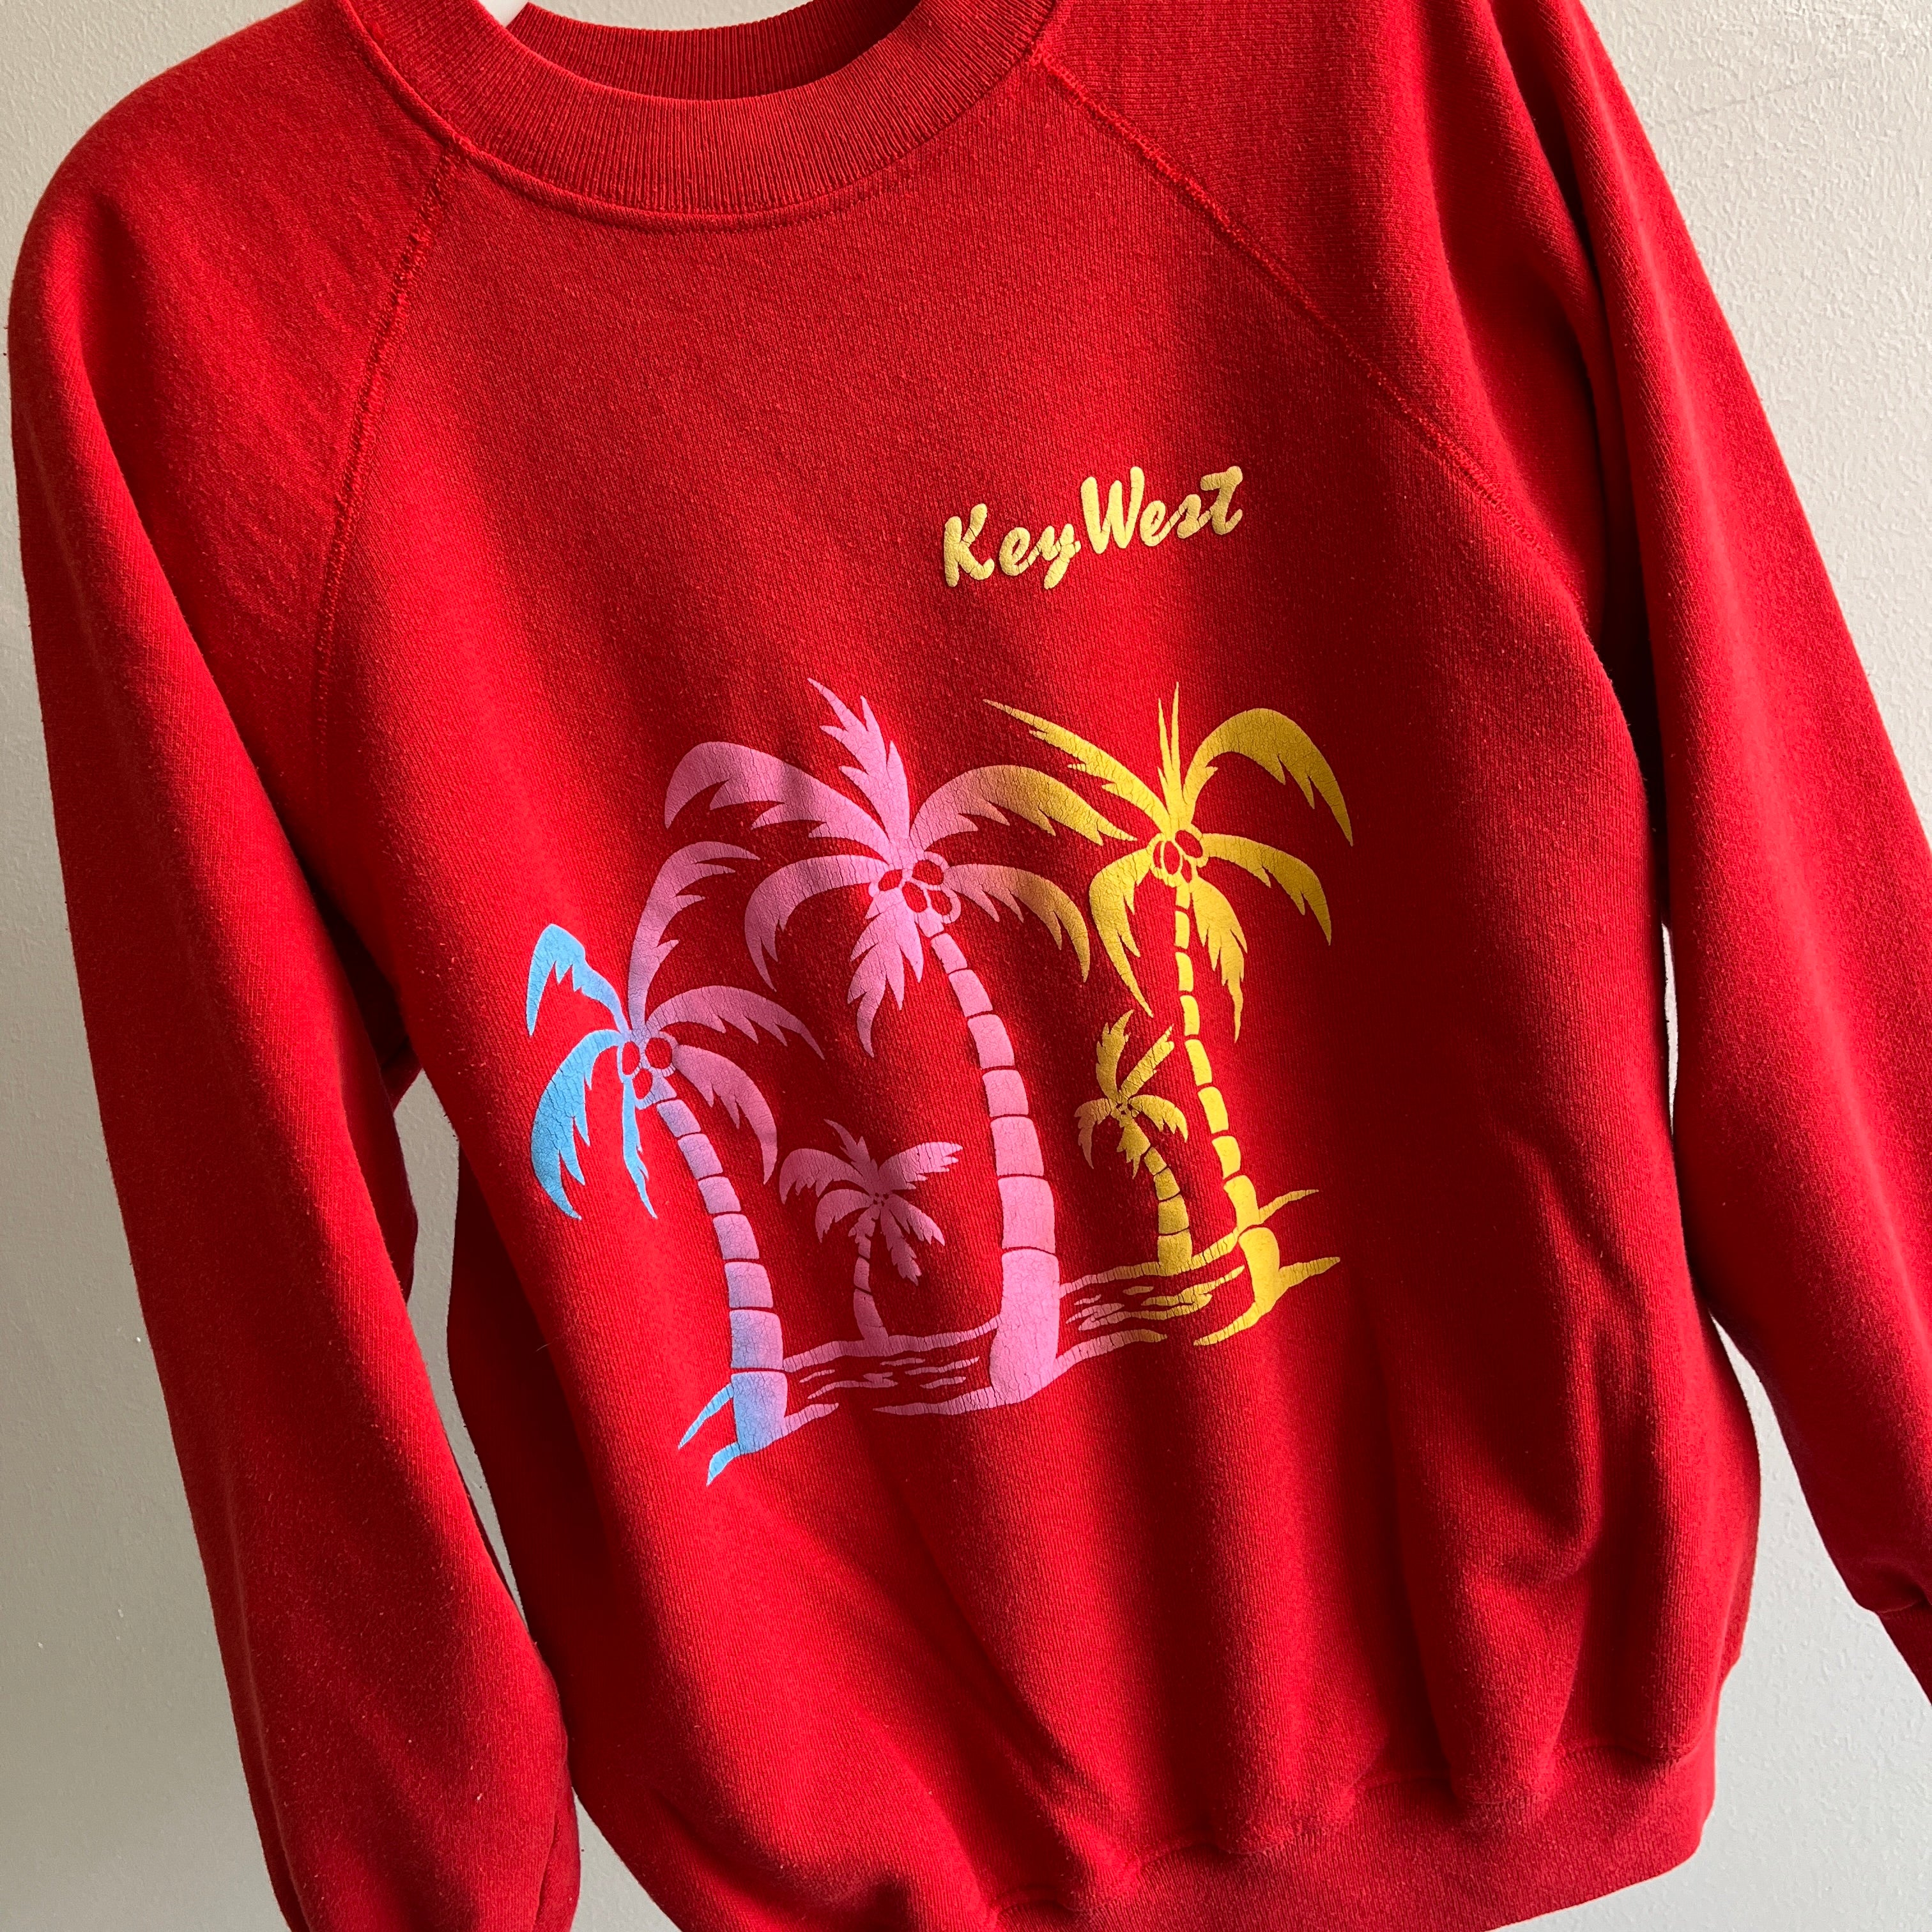 1980s Key West Tourist Sweatshirt by Hanes - A Good One!